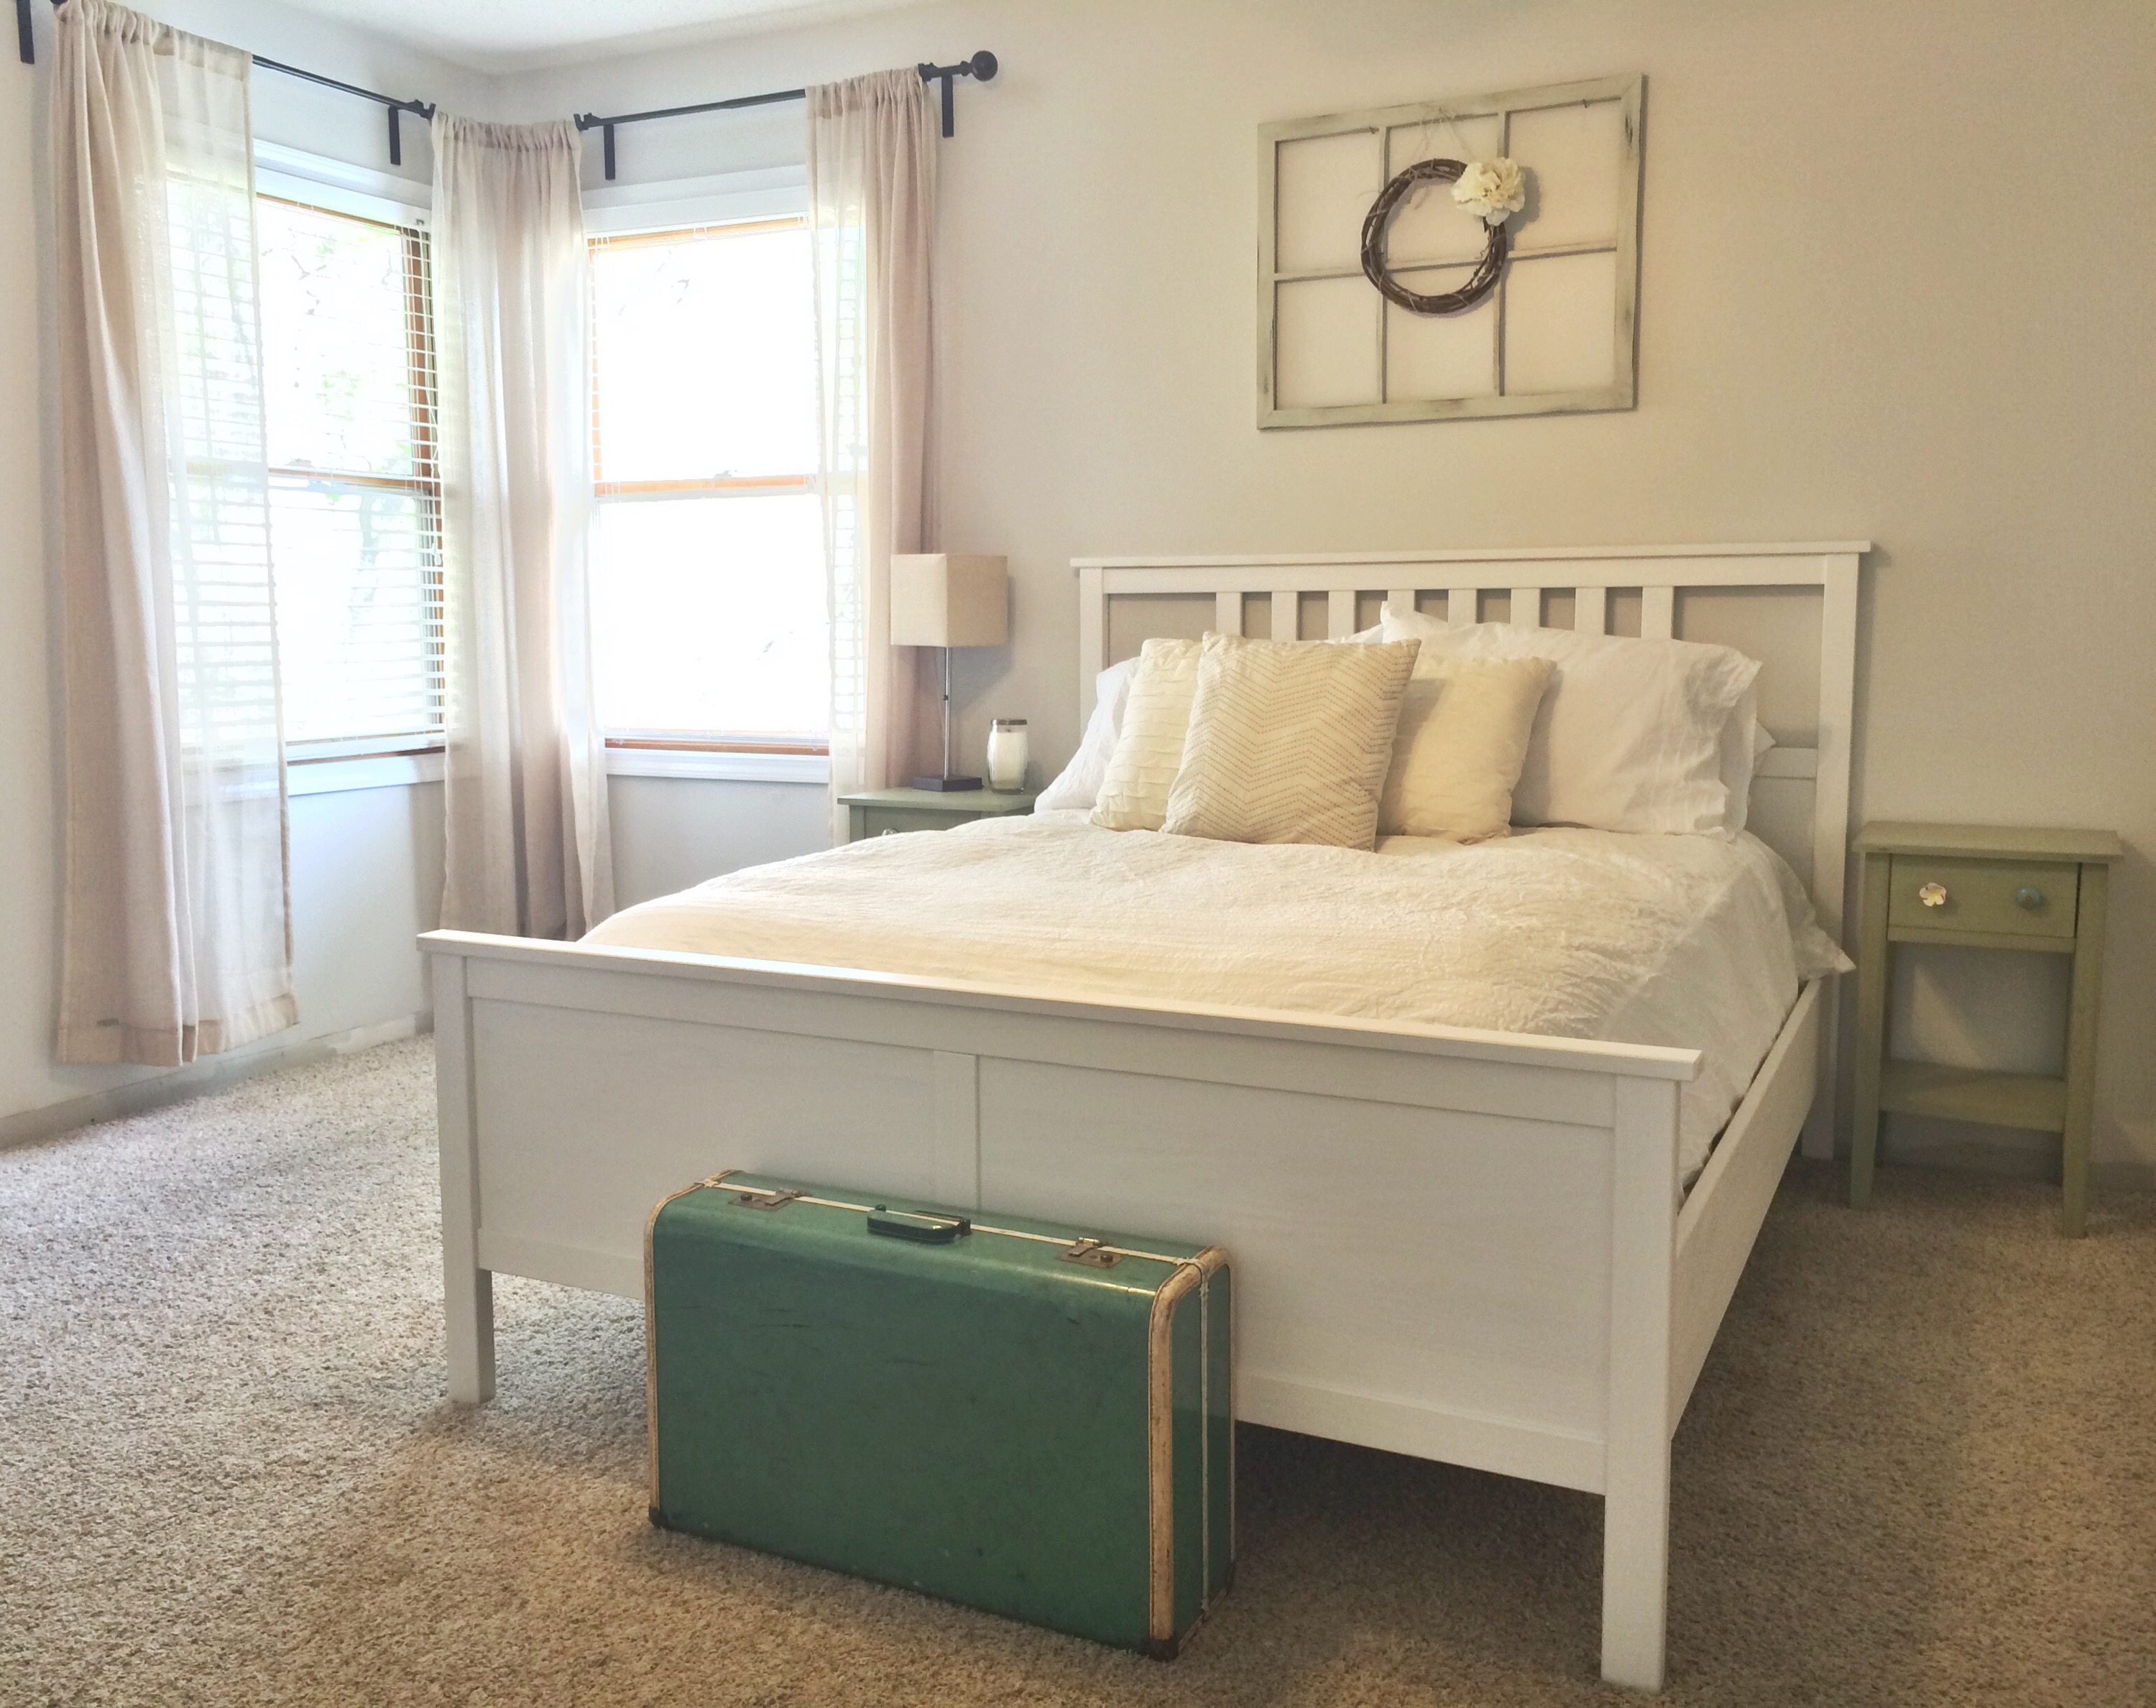 Neutral Guest Bedroom, Behr Silver Drop Paint, Ikea White Bed, Vintage Suitcase